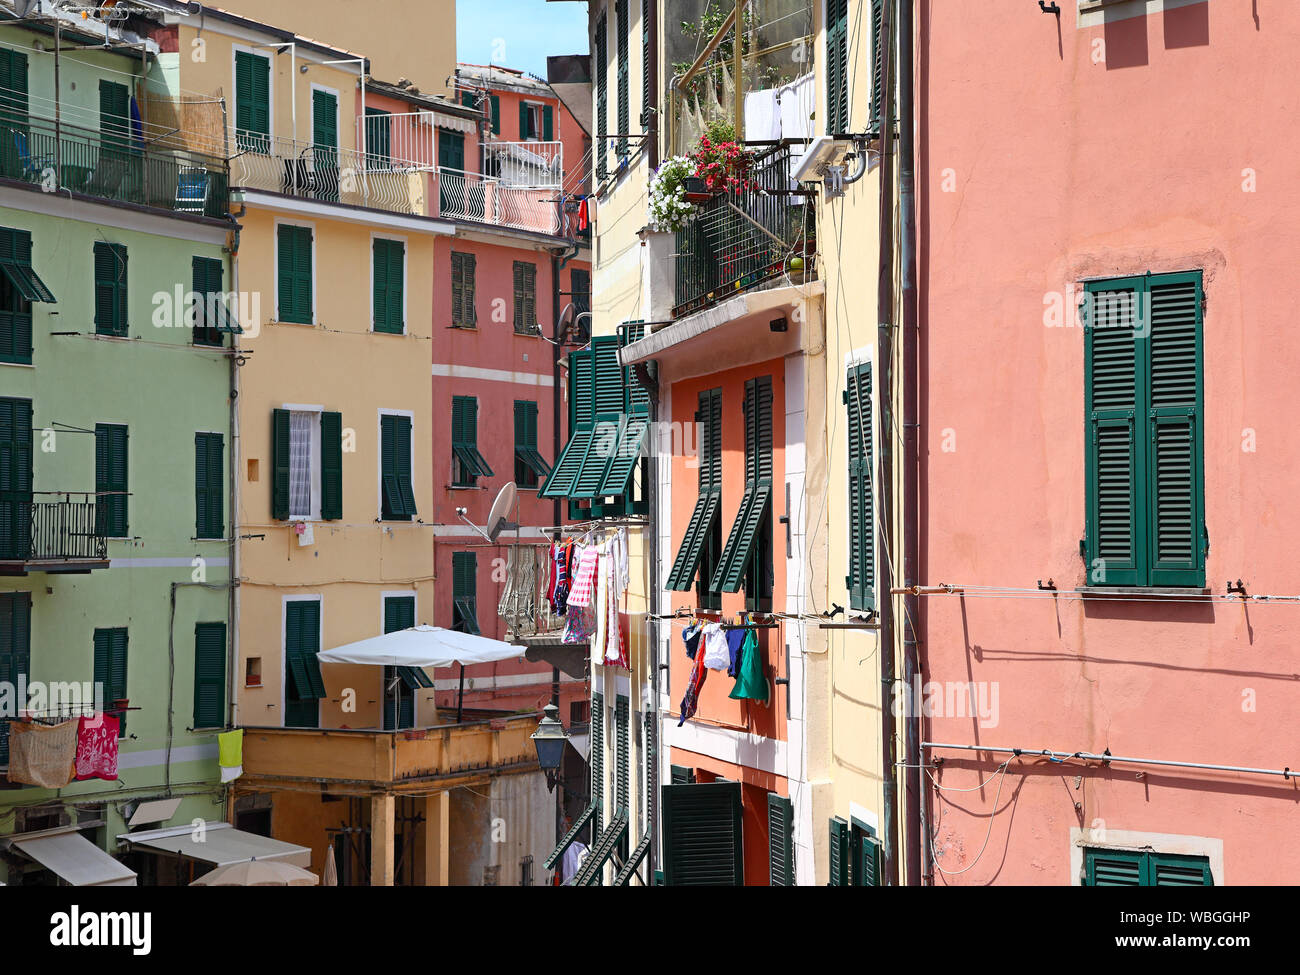 The colorful buildings of Vernazza, Cinque Terre town on the Italian coastline Stock Photo